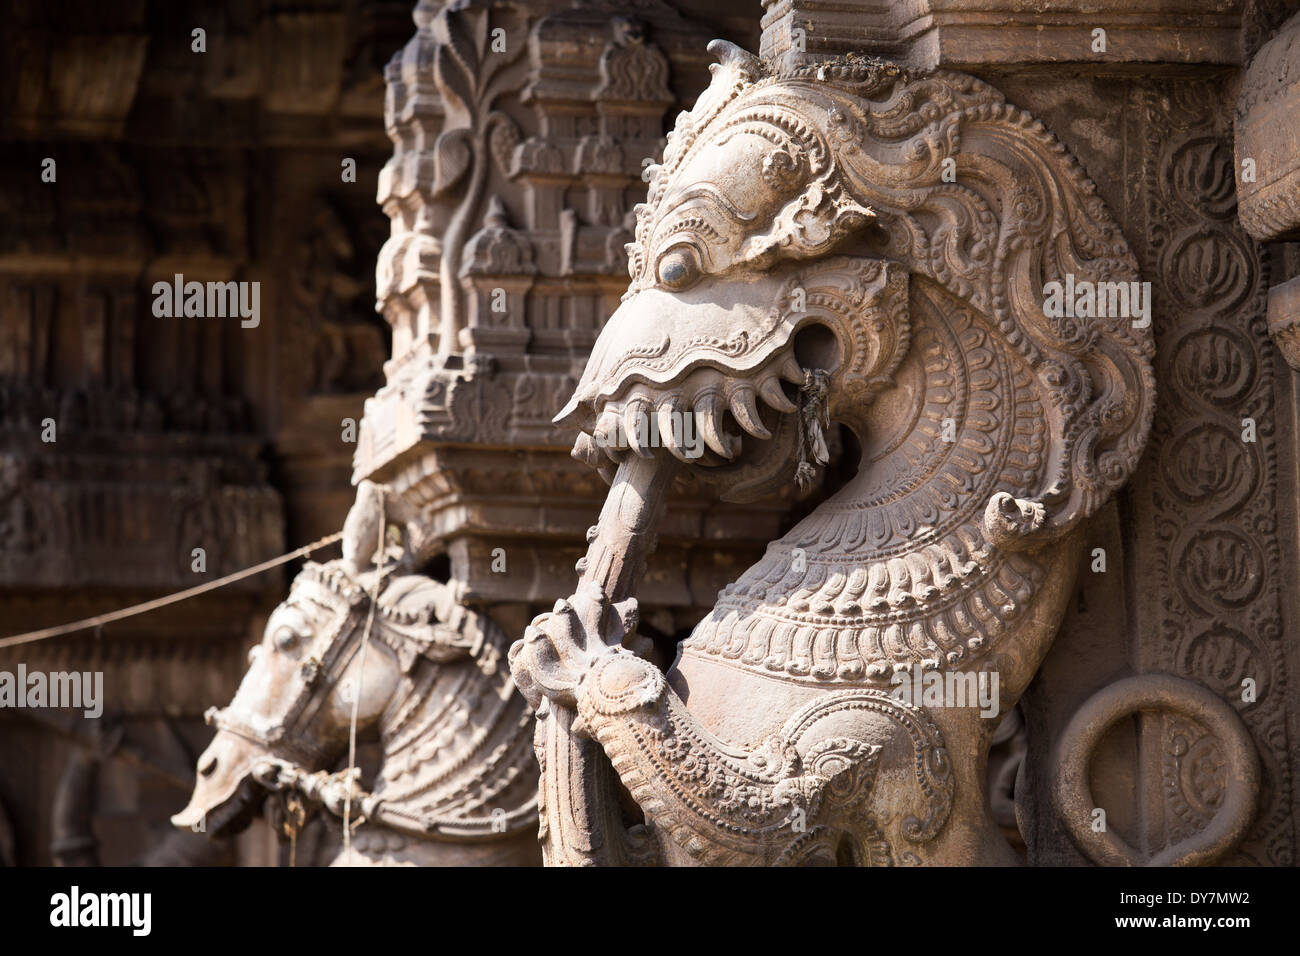 Hindu sculptures outside the Meenakshi Amman Temple, Madurai, India Stock Photo